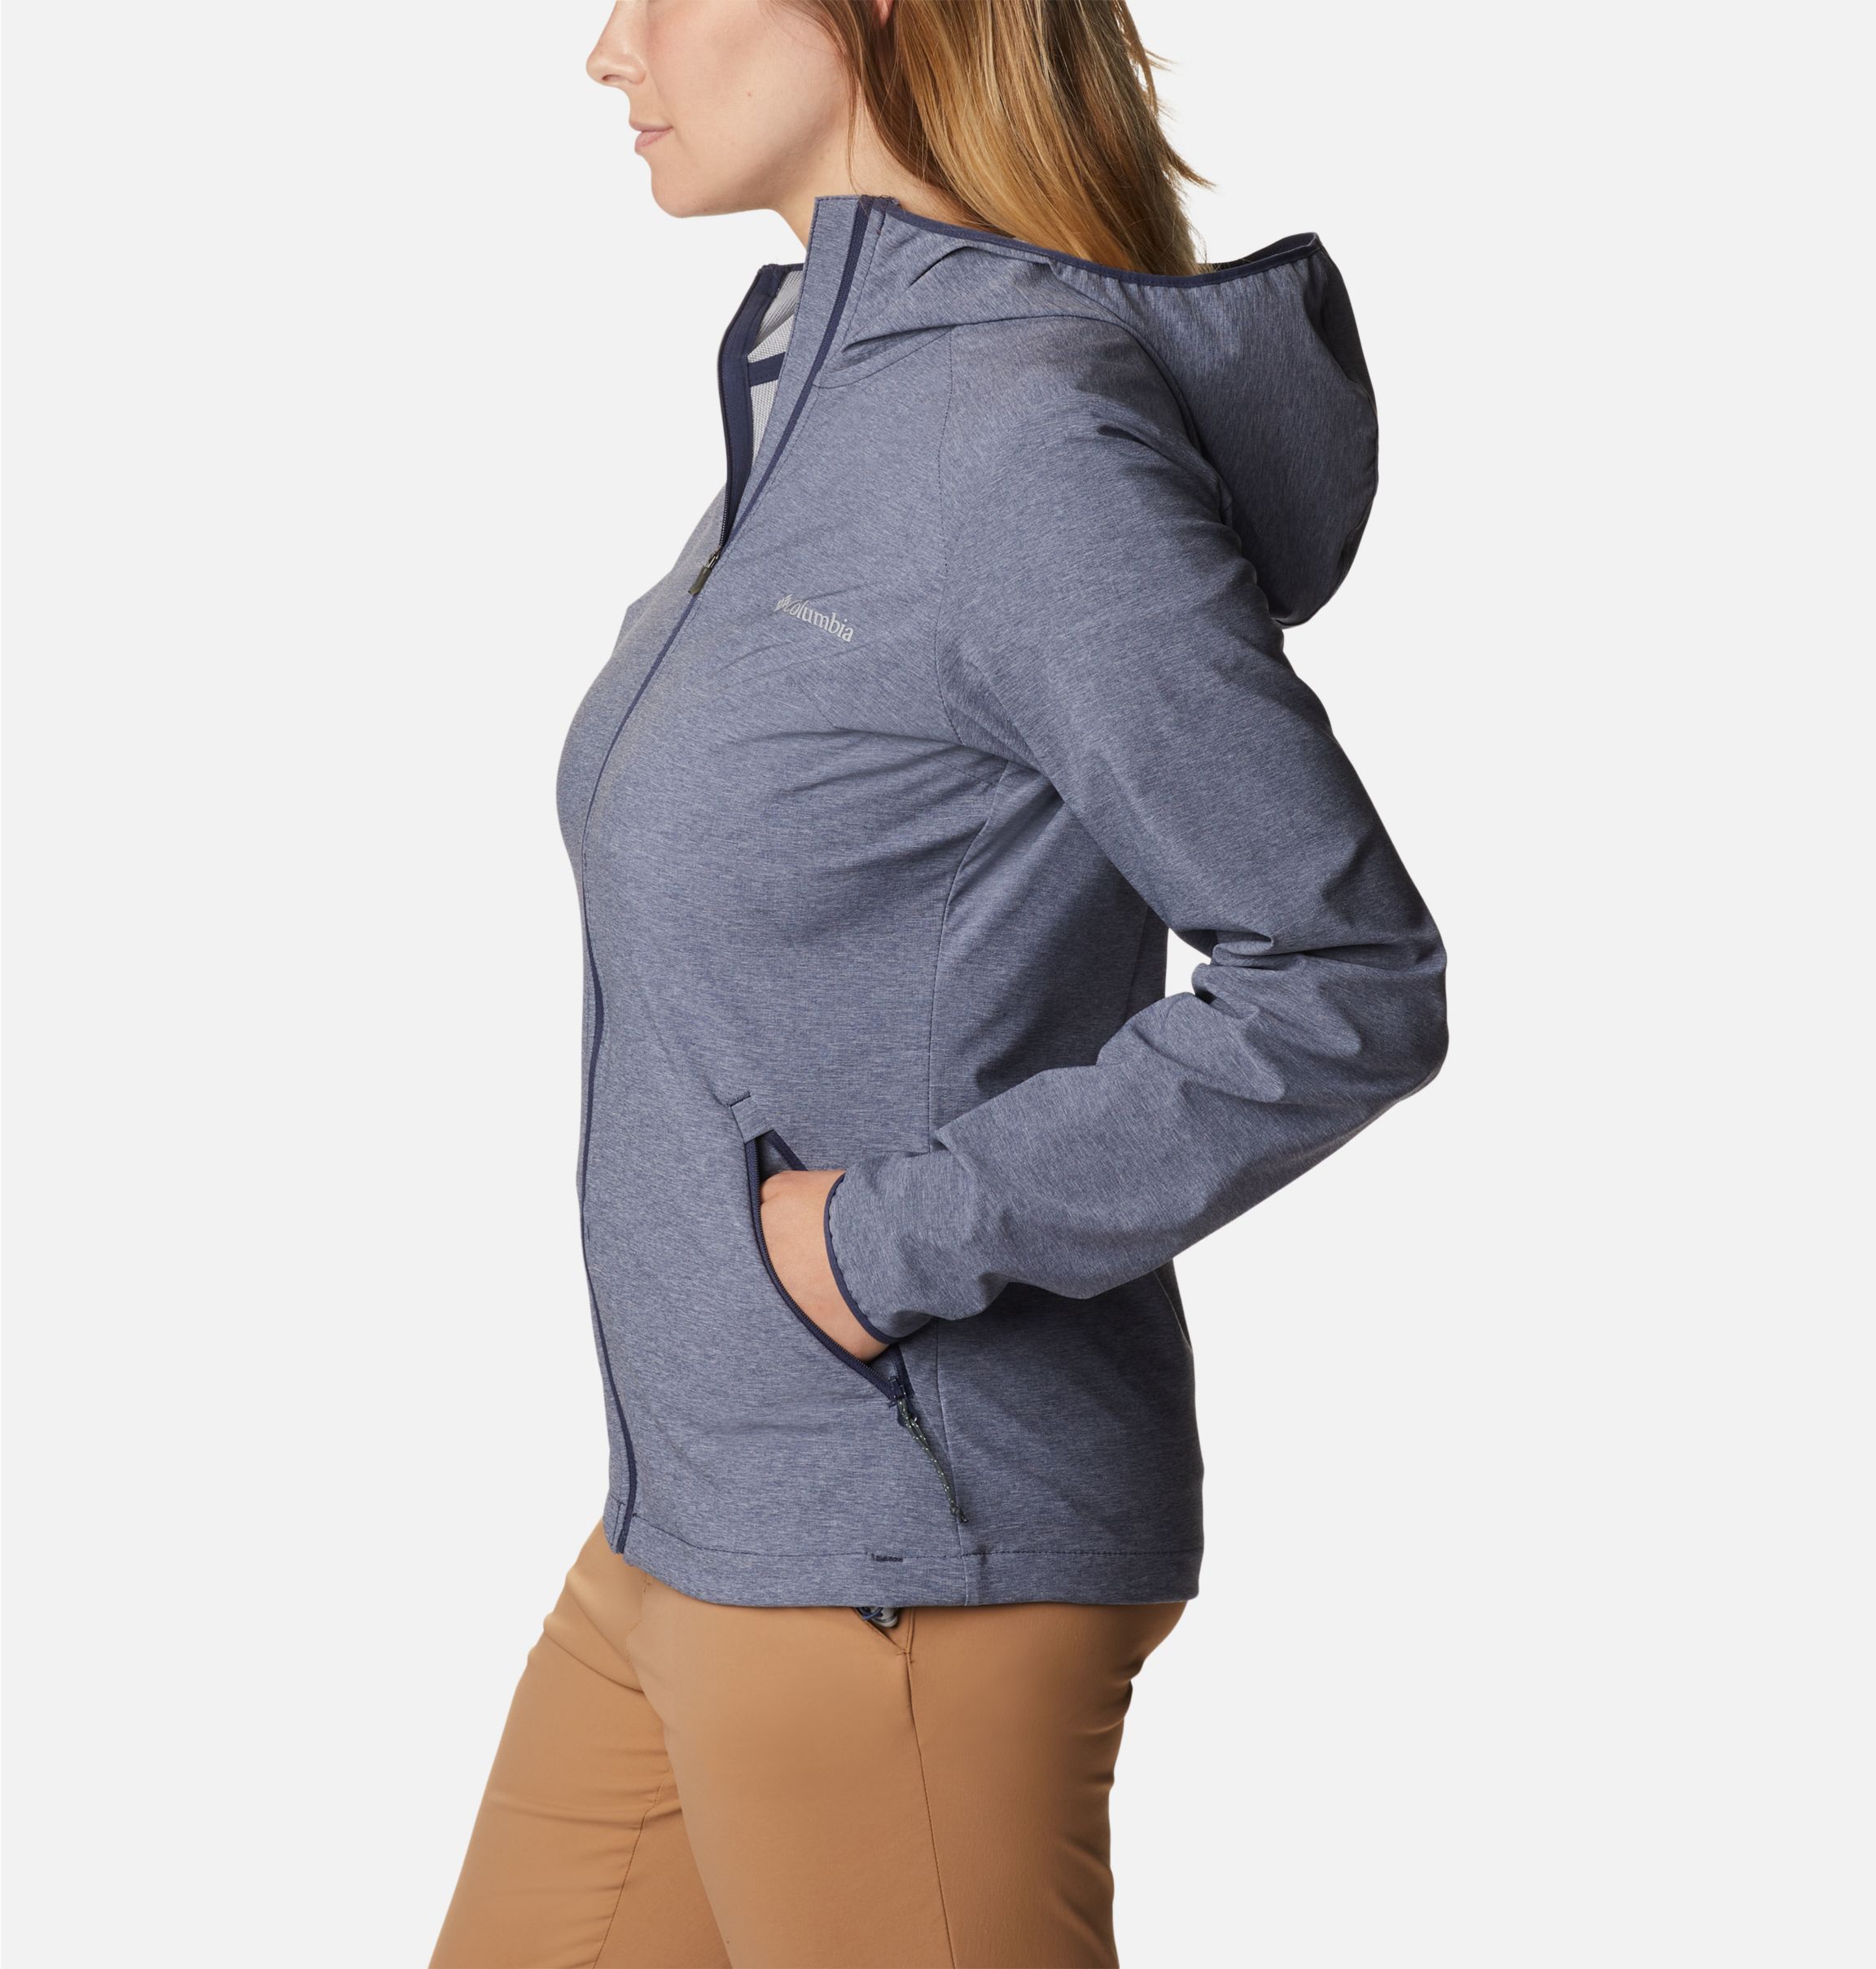 Women's Heather Canyon™ Softshell Jacket